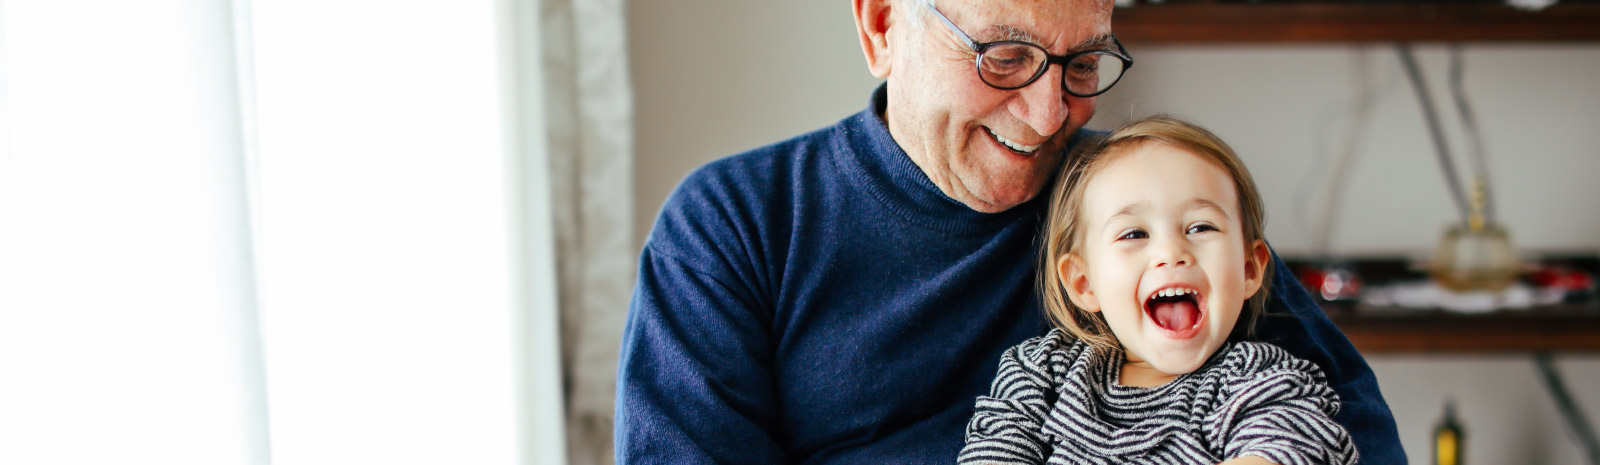 The man joyfully holding a grandchild